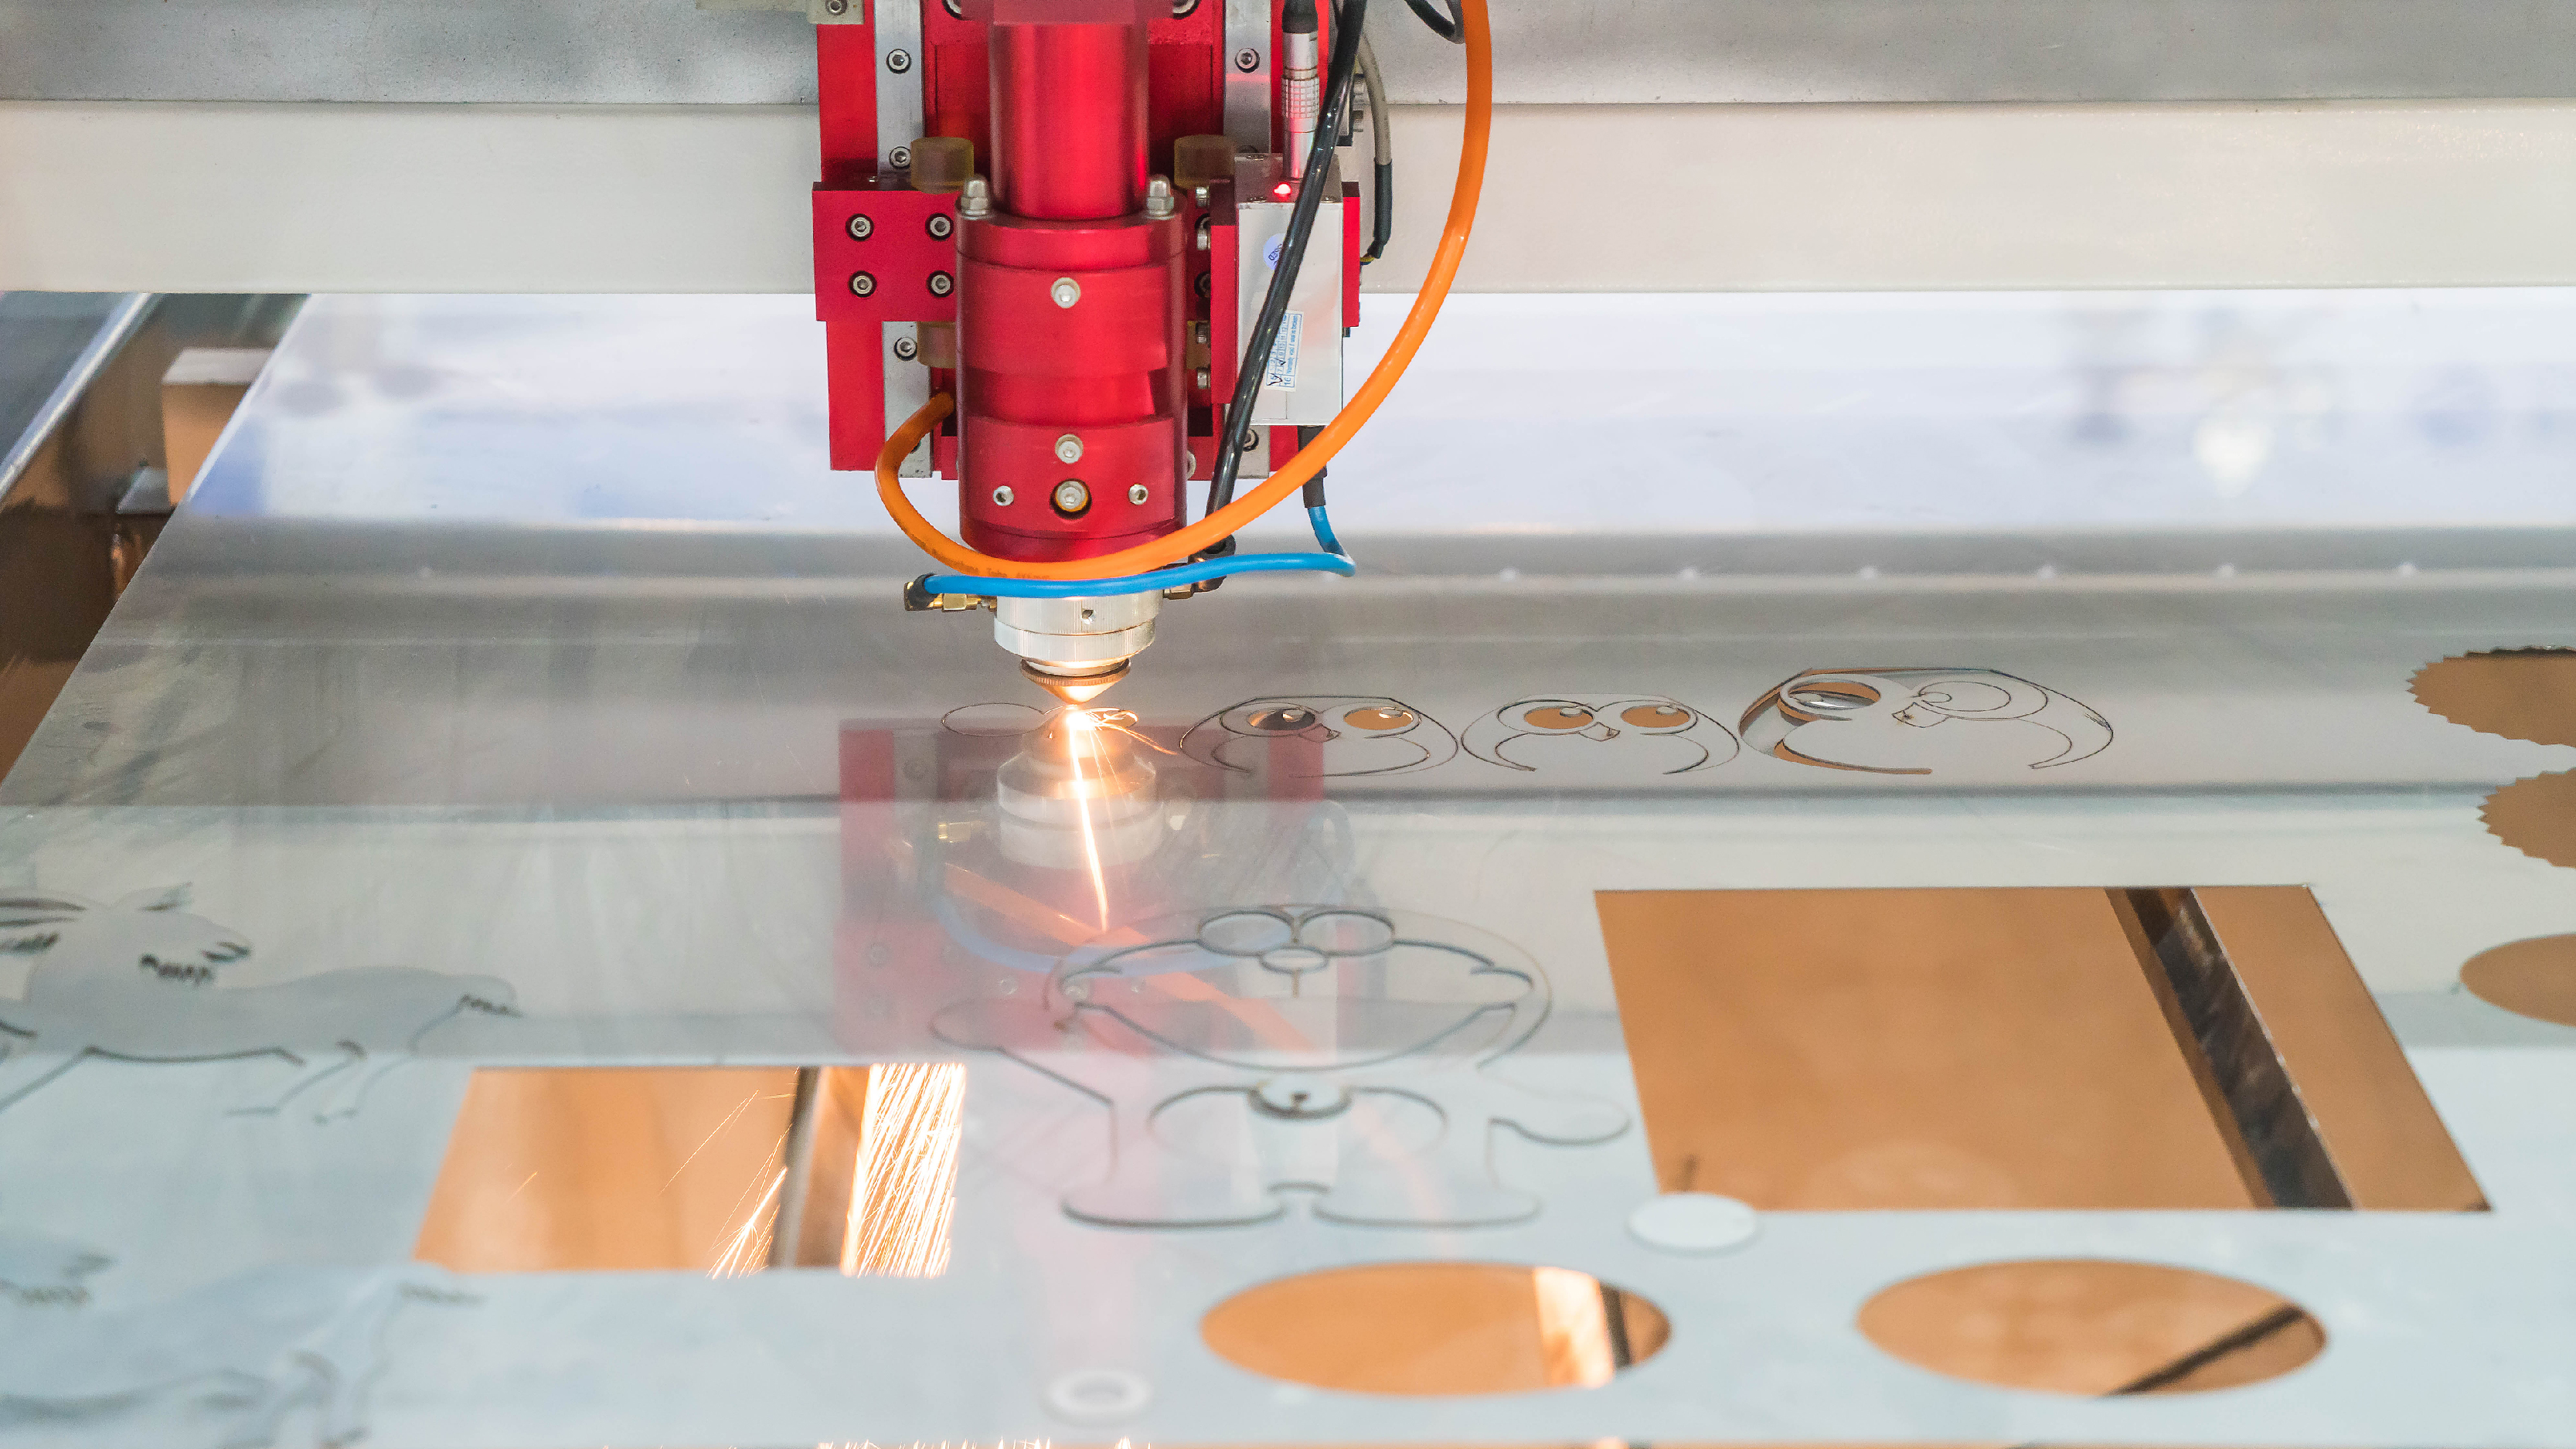 laser cutting machine cutting artistic design on metal sheet